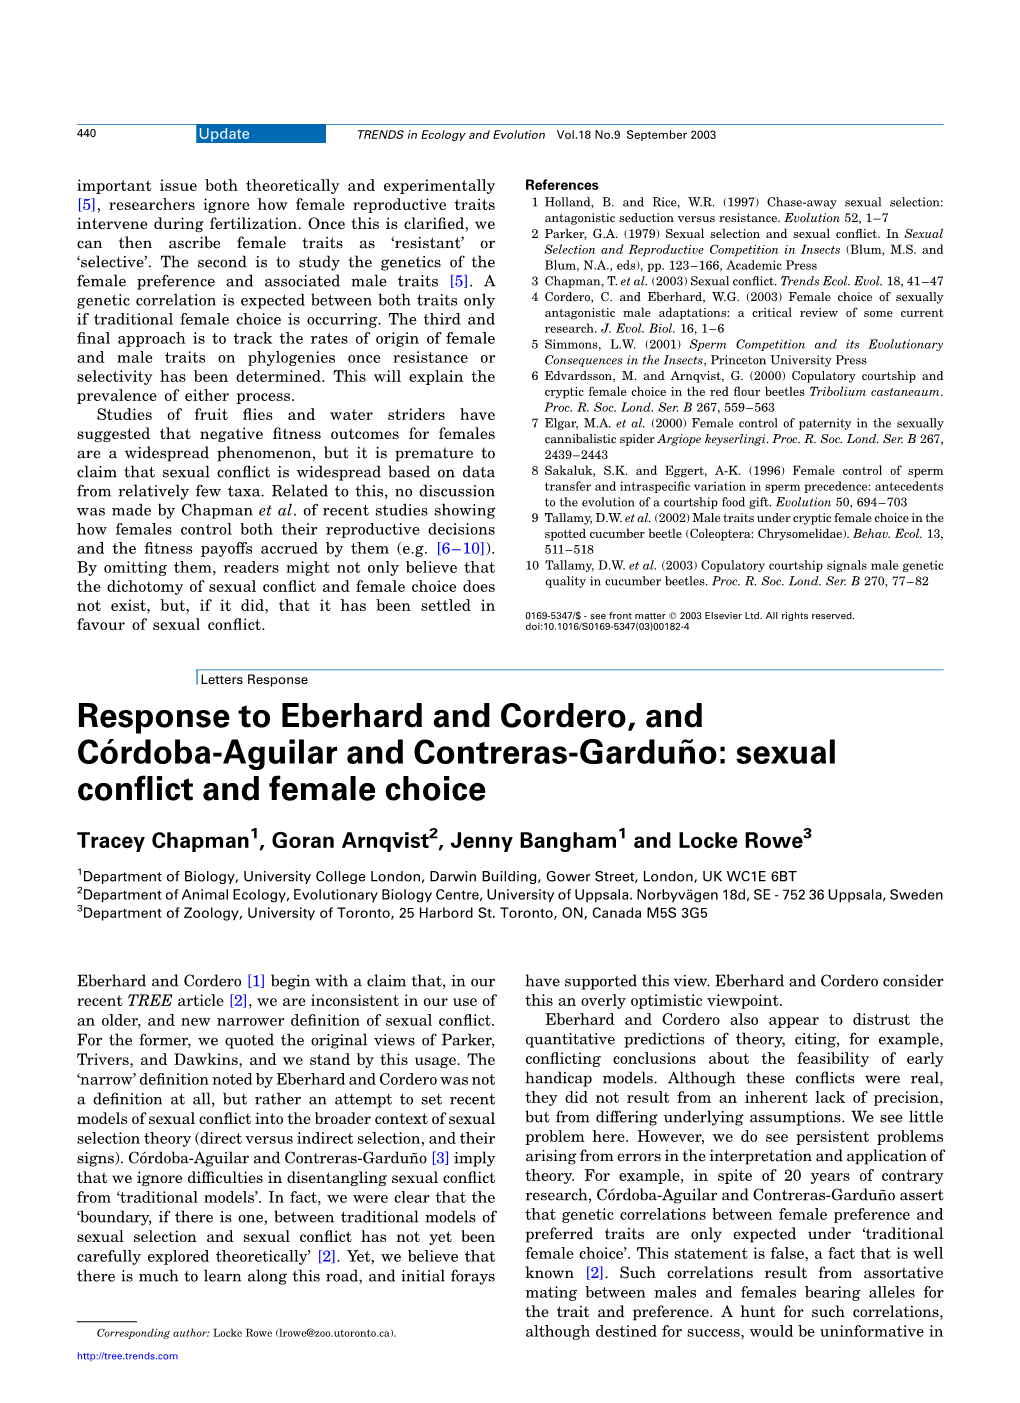 Response to Eberhard and Cordero, and Co´ Rdoba-Aguilar and Contreras-Gardun˜ O: Sexual Conflict and Female Choice